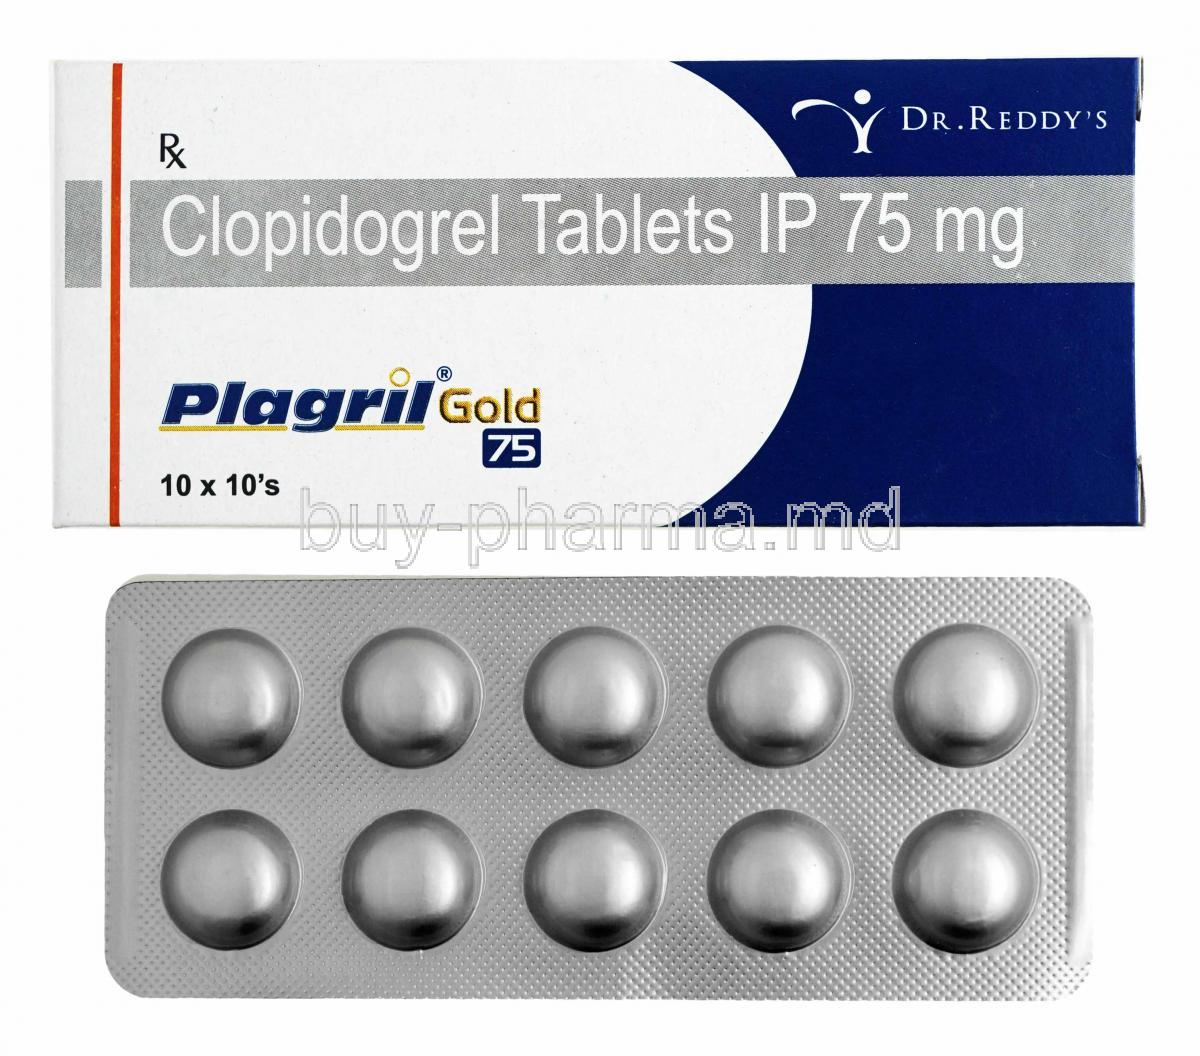 Plagril Gold, Clopidogrel 75mg box and tablets